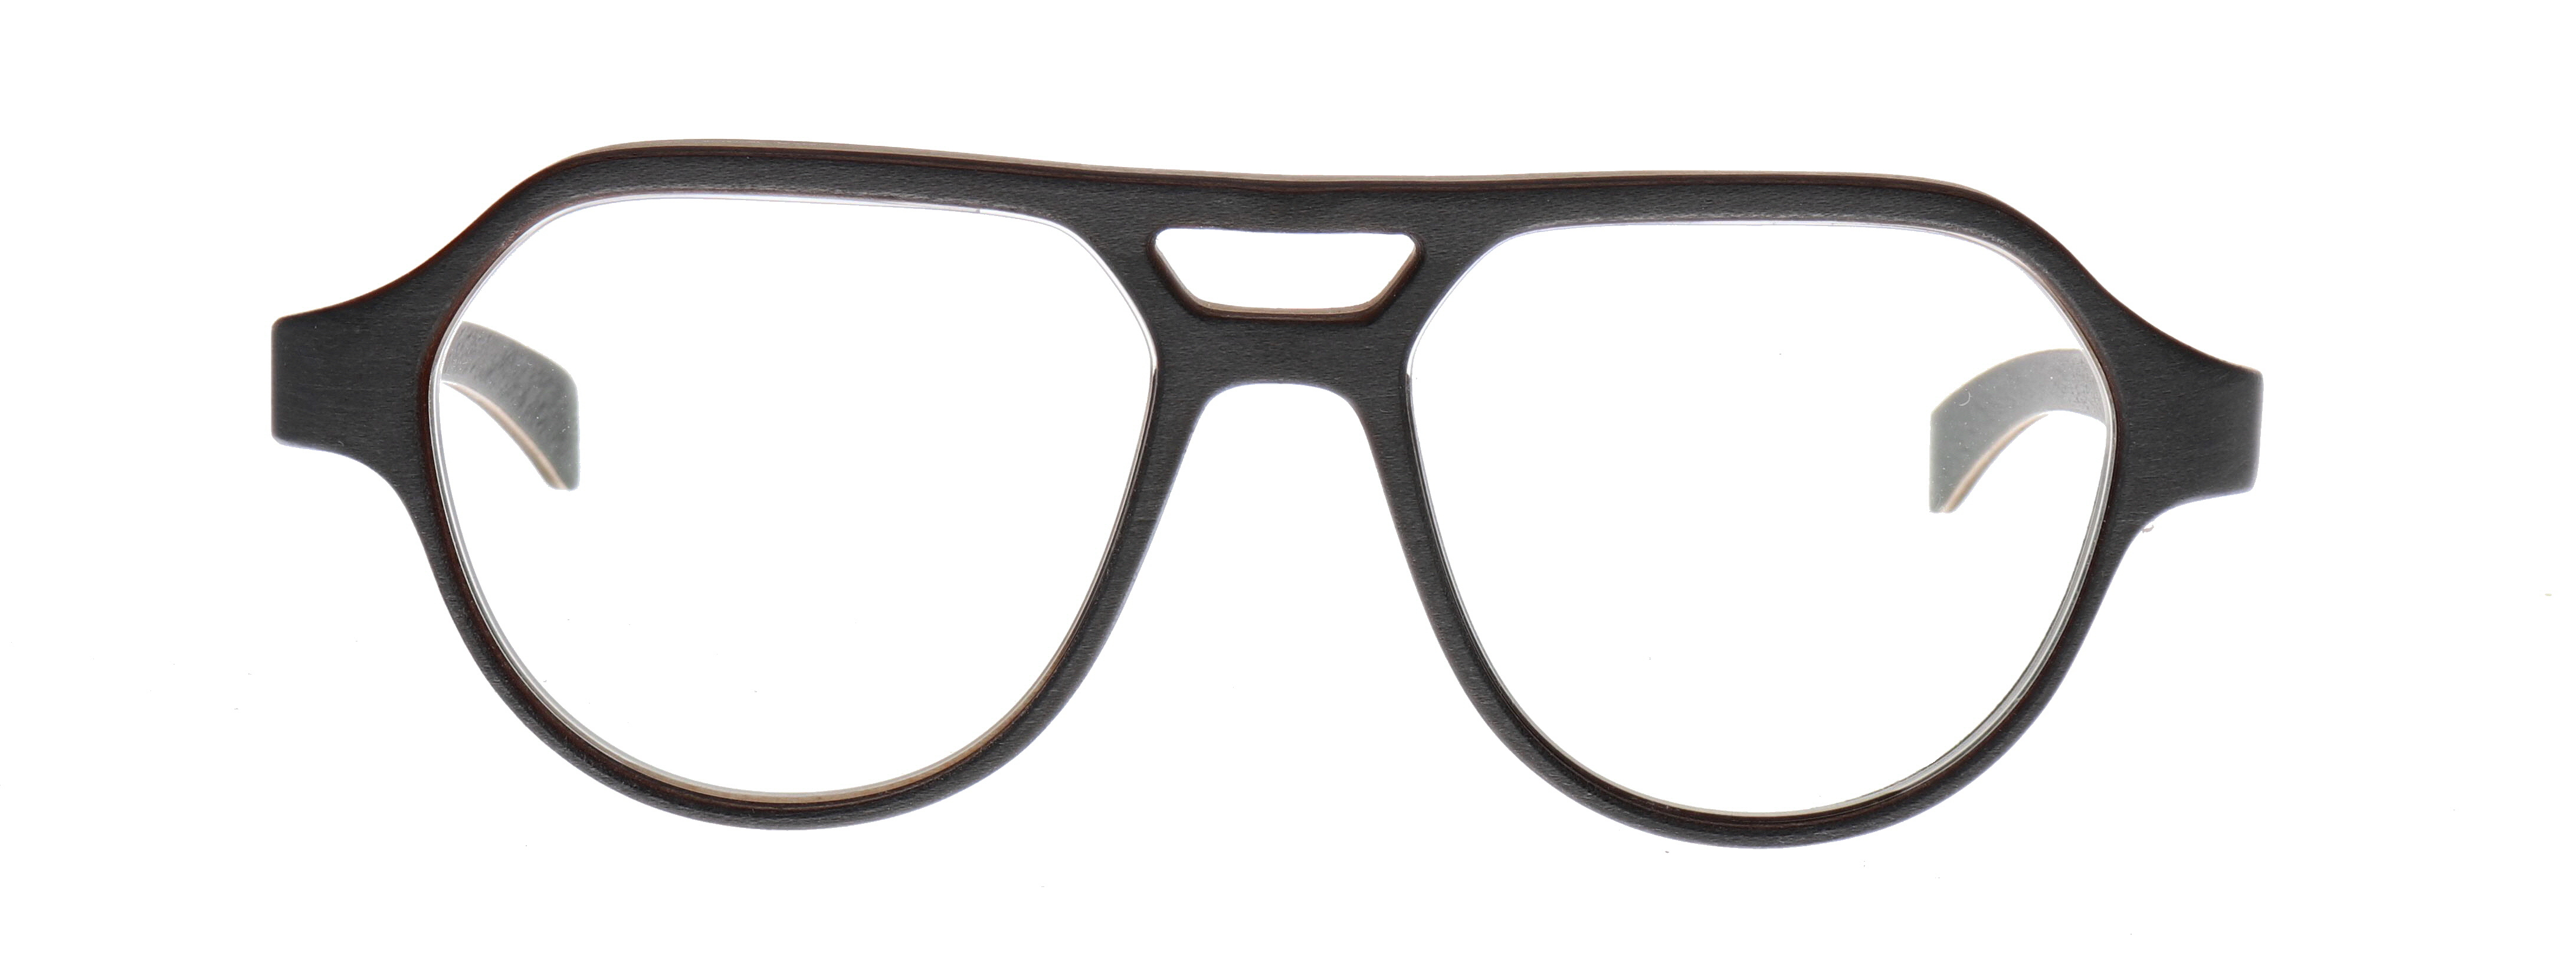 Rolf Spectacles Vega